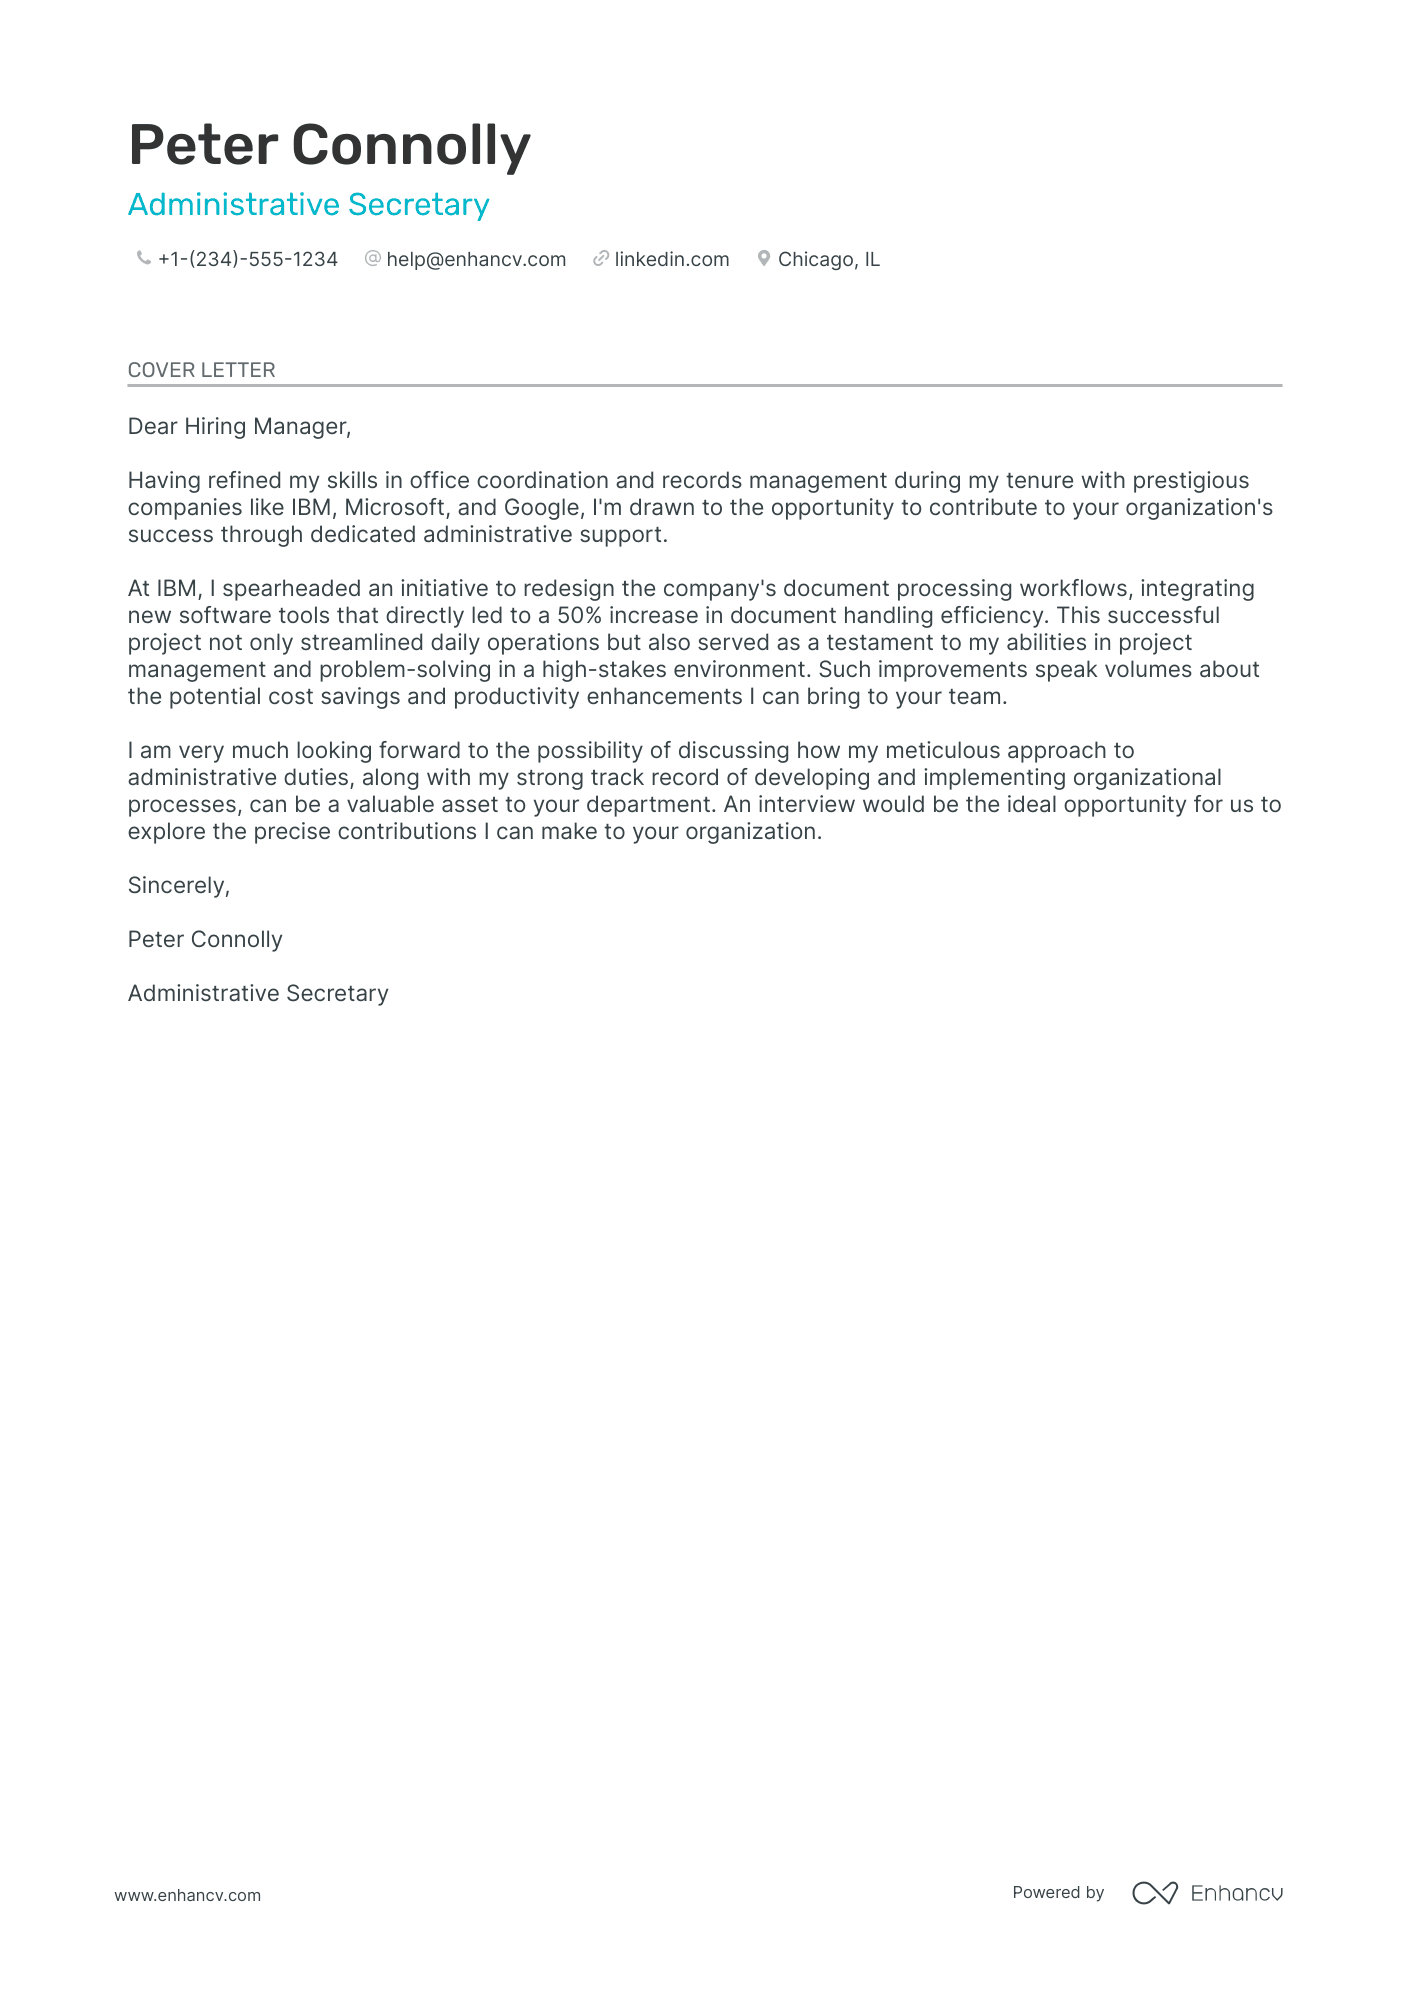 Administrative Secretary cover letter